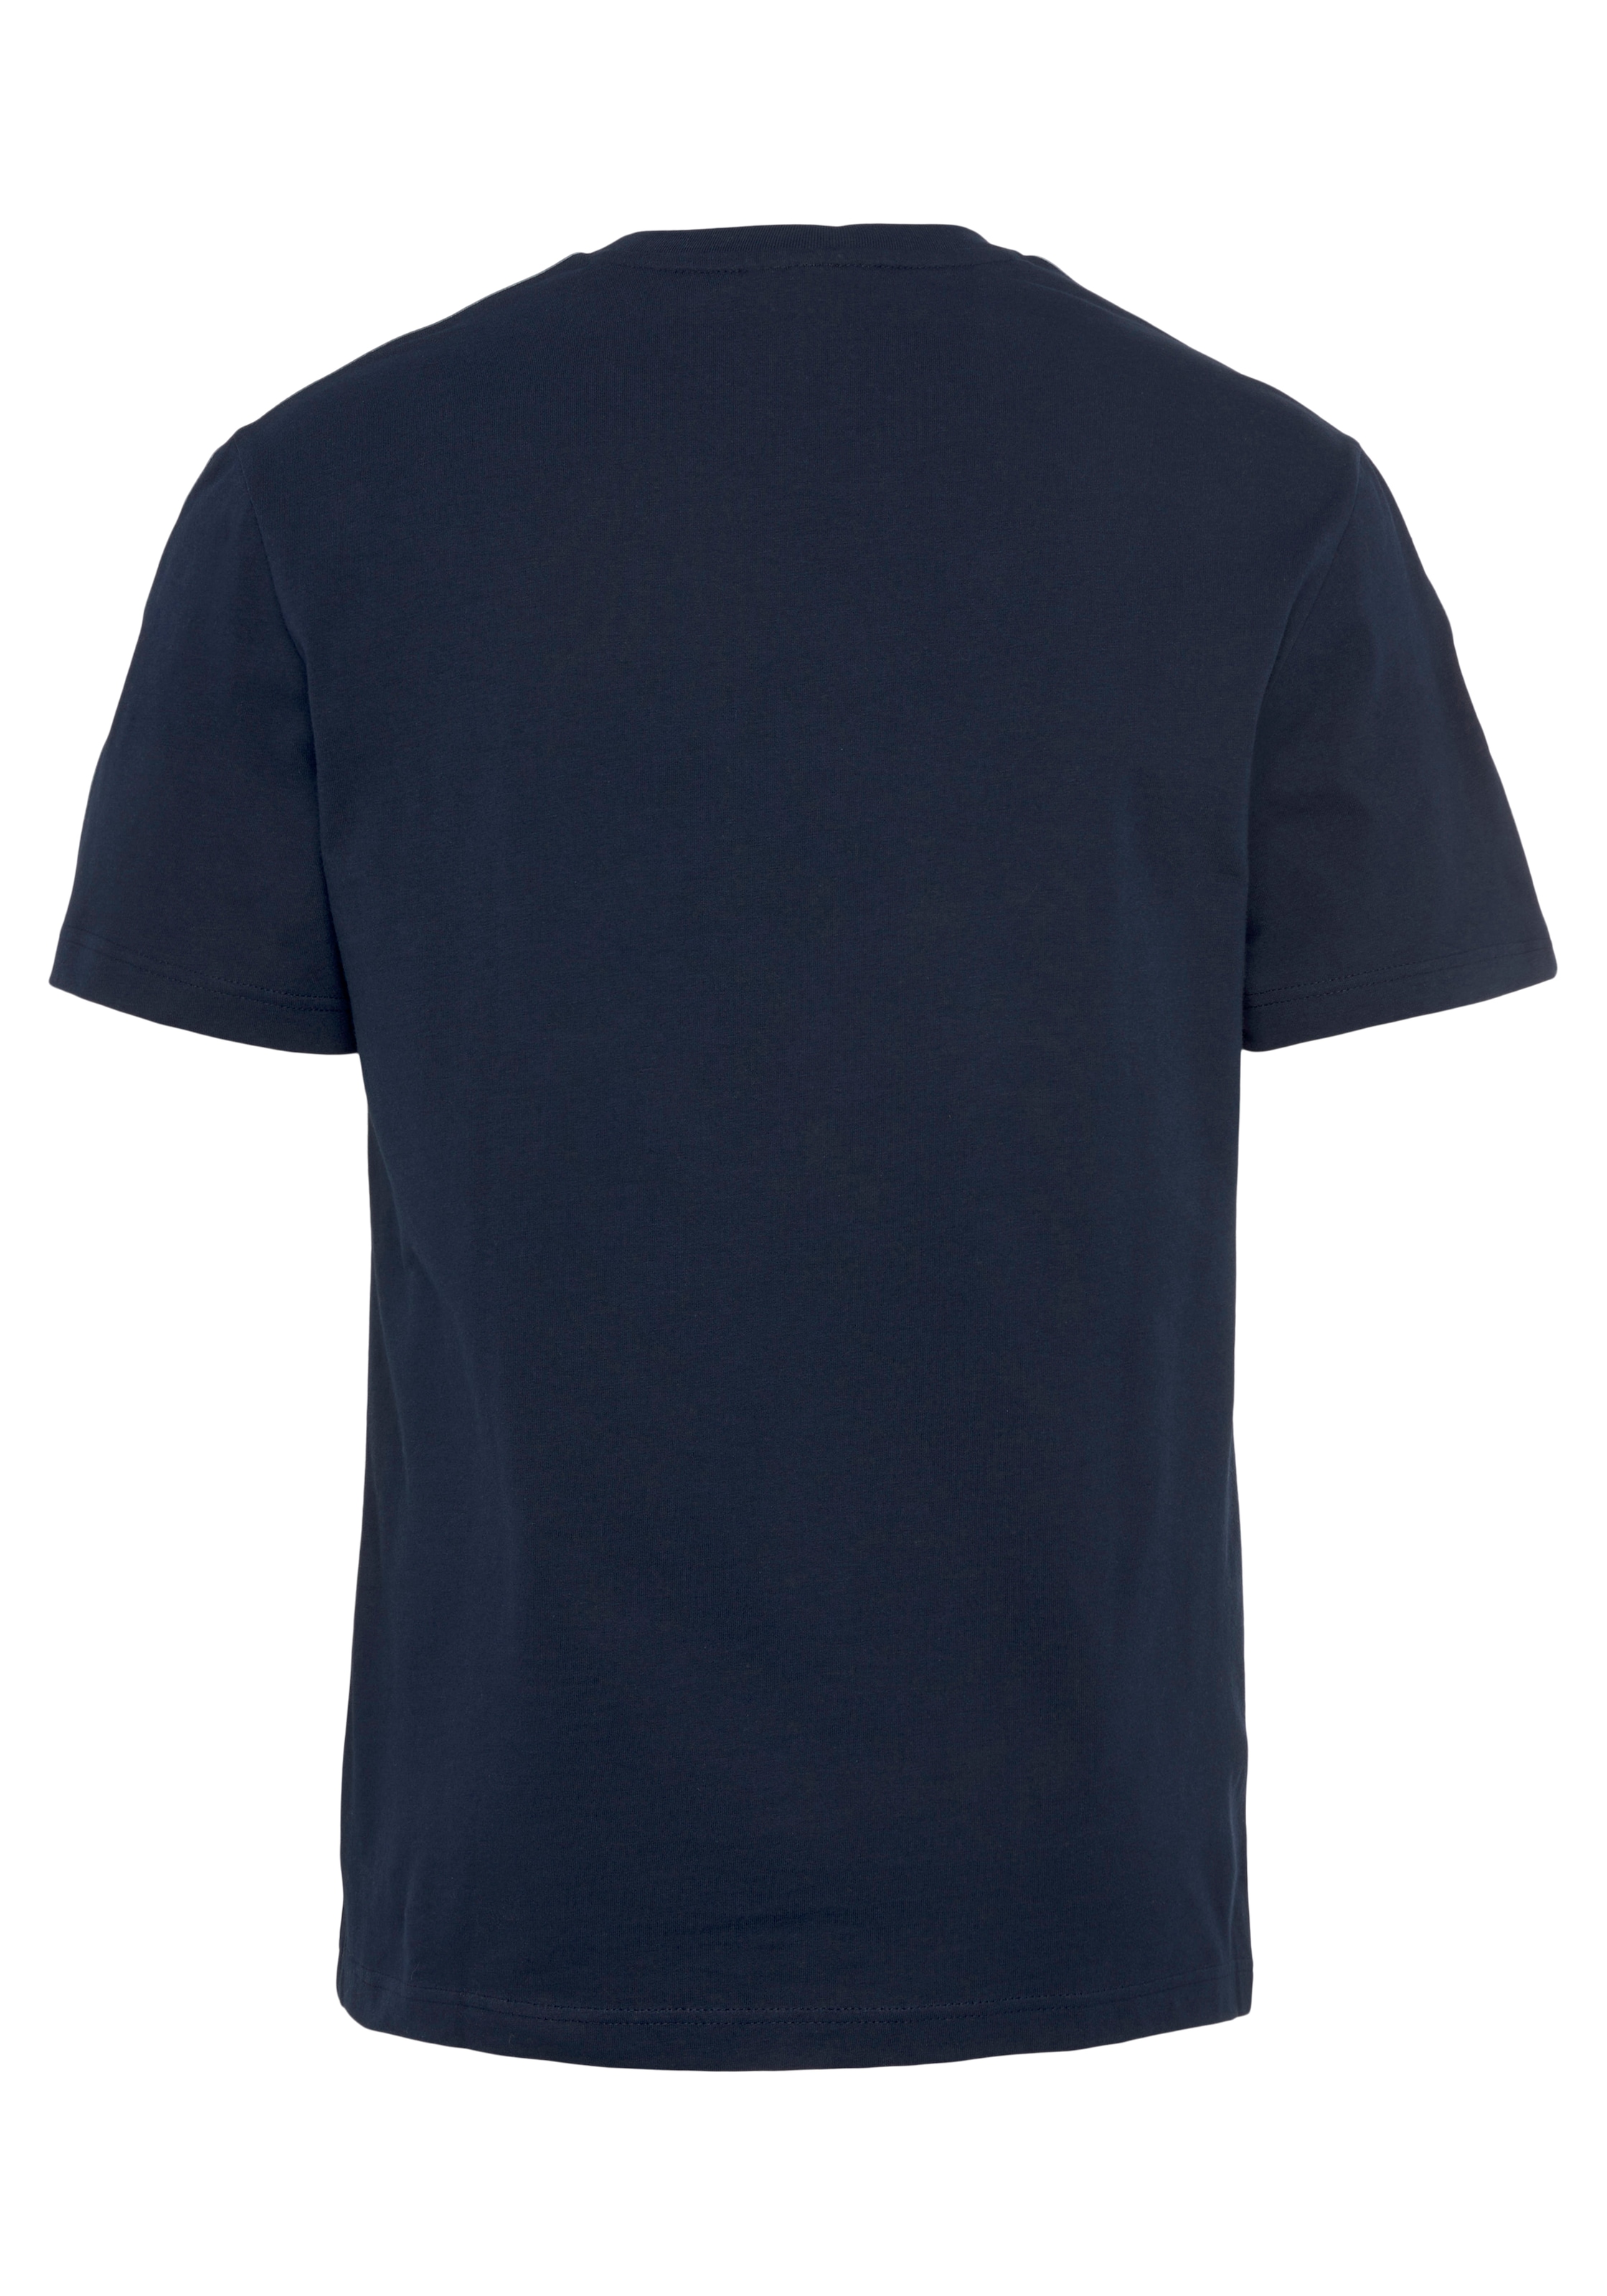 Lacoste den online beschriftetem Kontrastband bestellen bei Schultern an T-Shirt, mit OTTO